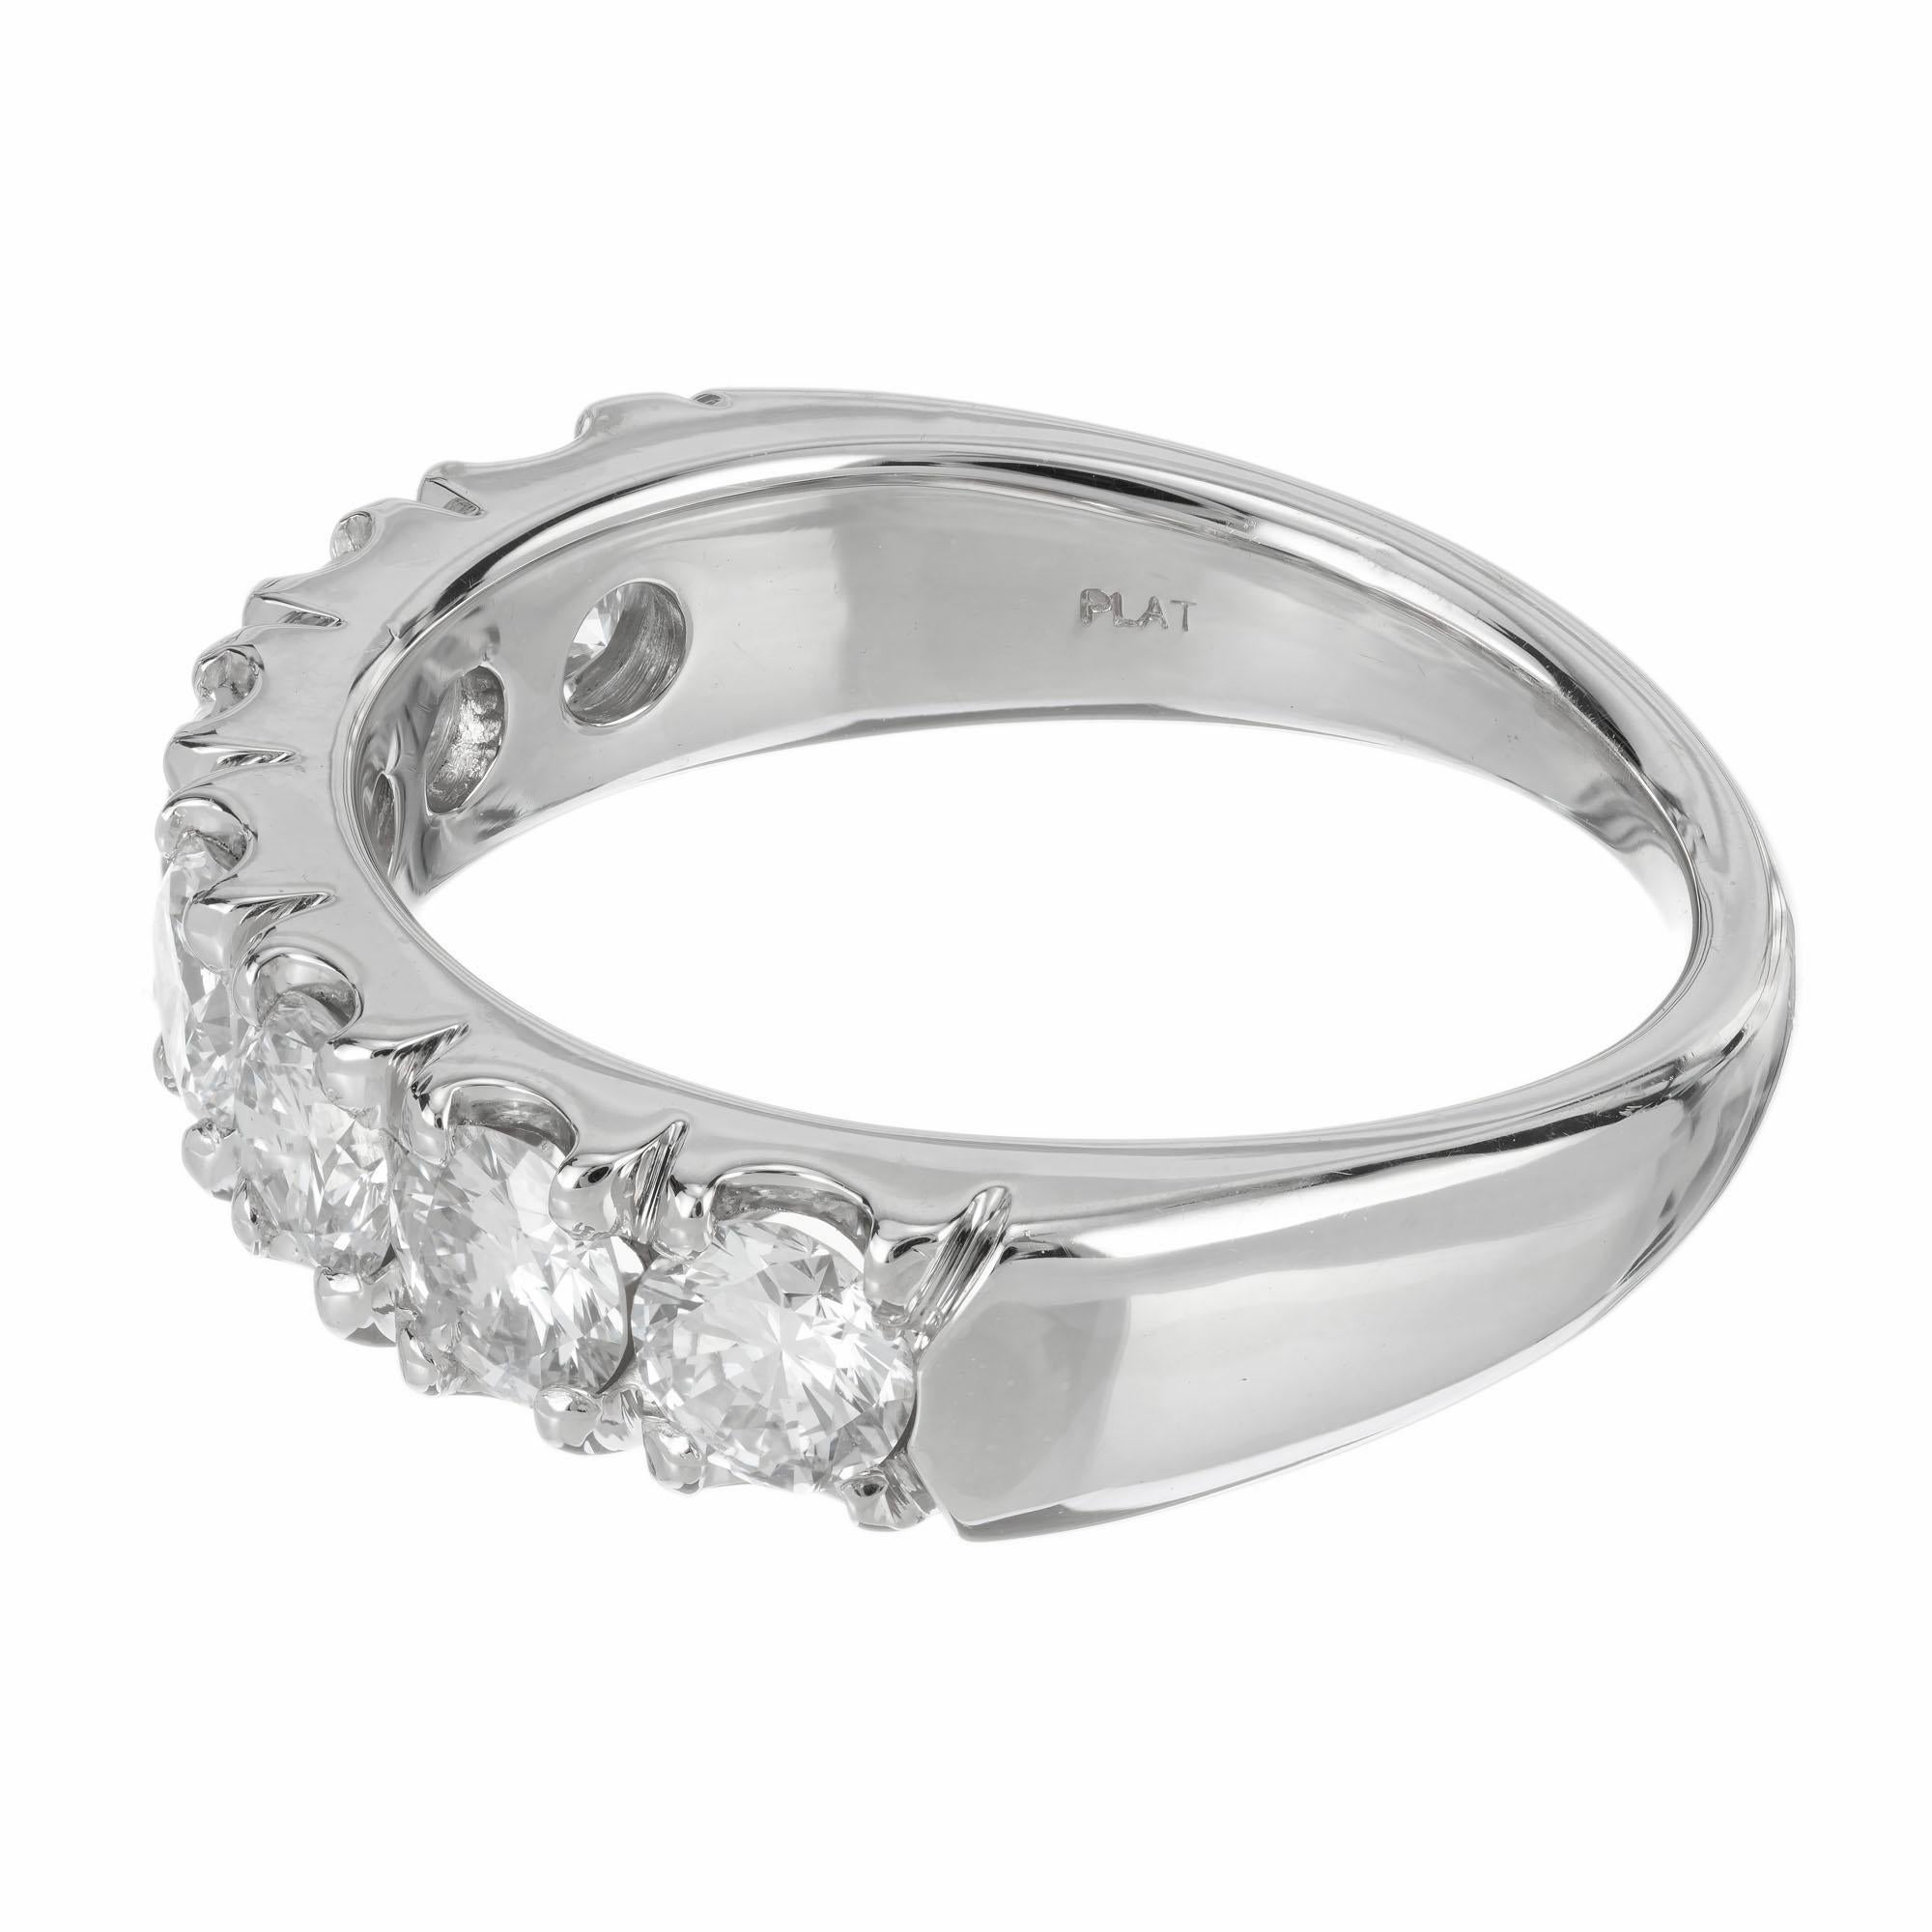 Round Cut Peter Suchy 1.37 Carat Diamond Platinum Wedding Band Ring For Sale